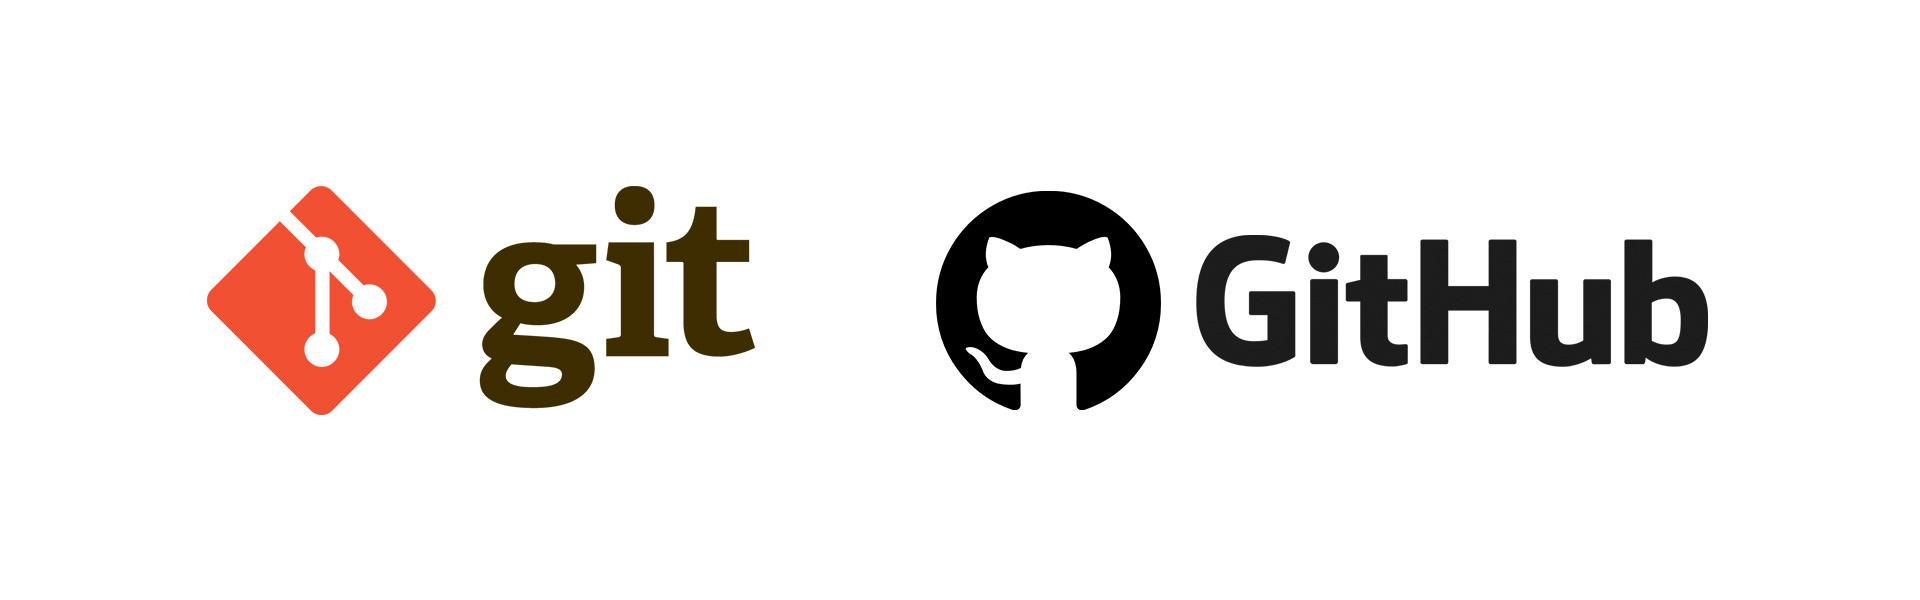 A illustration of Github and Git